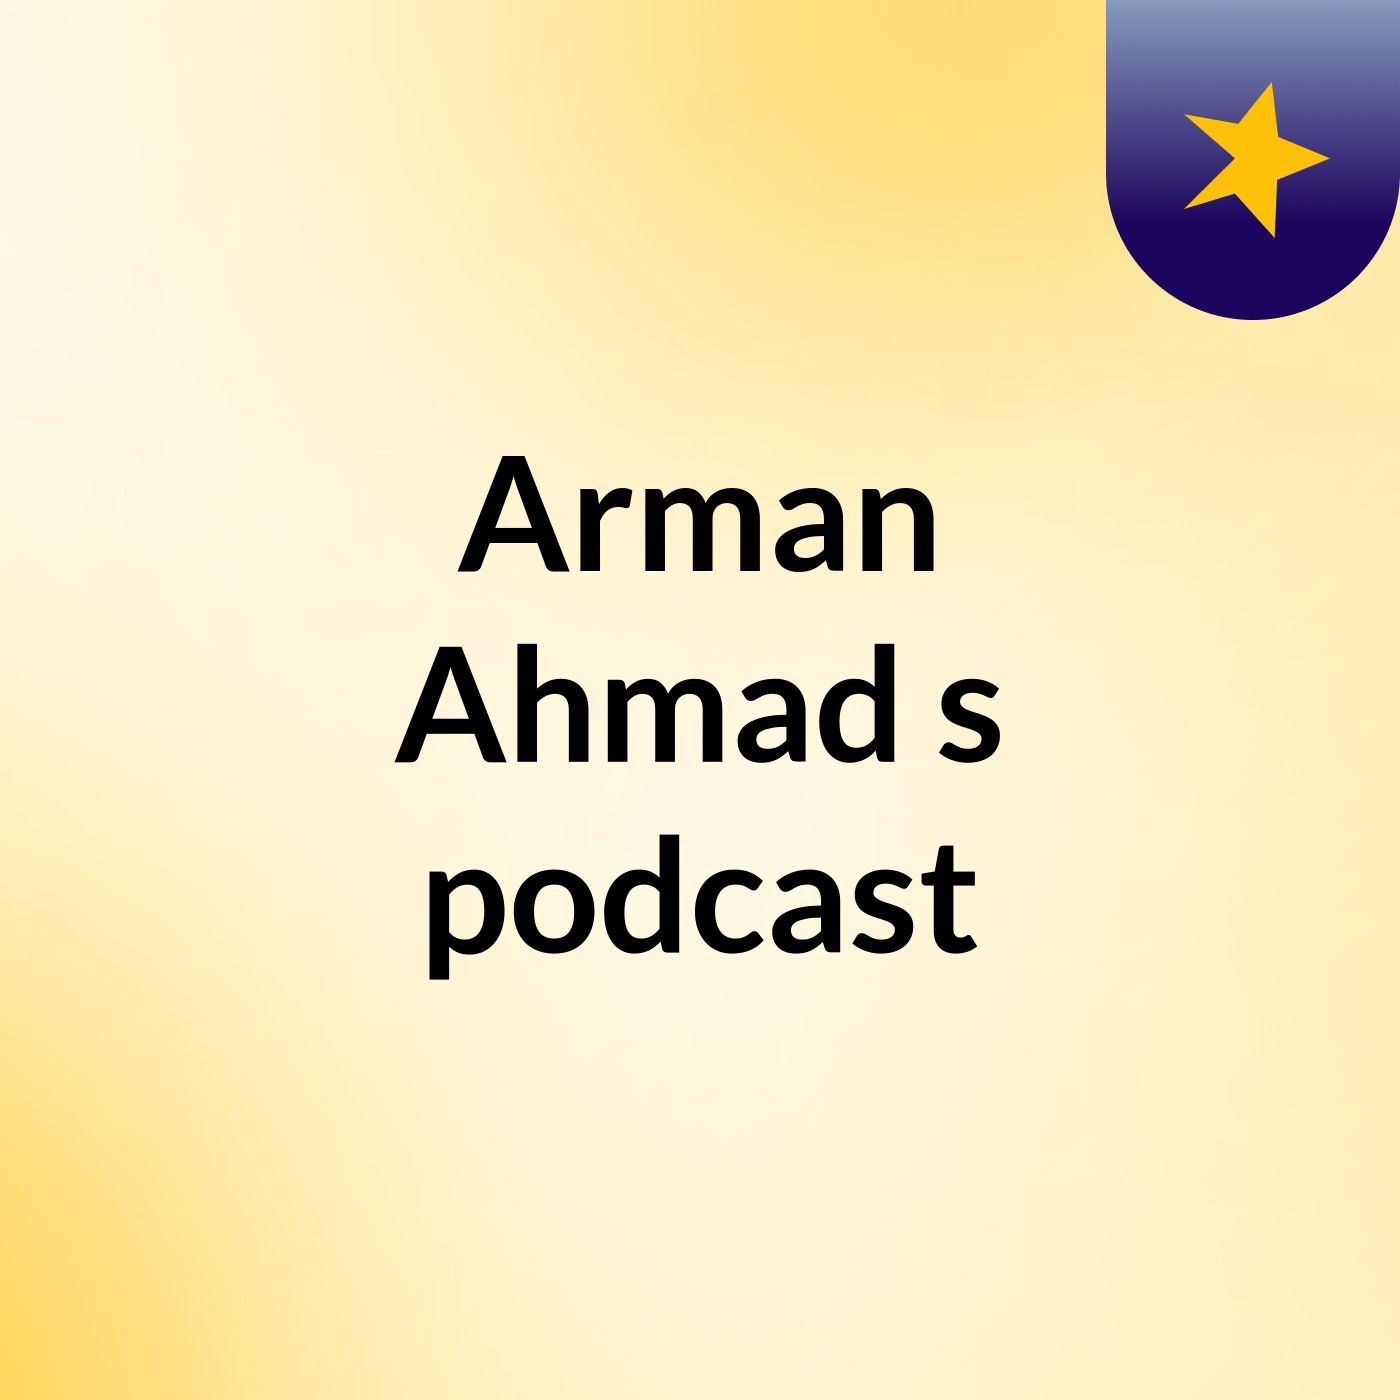 Arman Ahmad's podcast